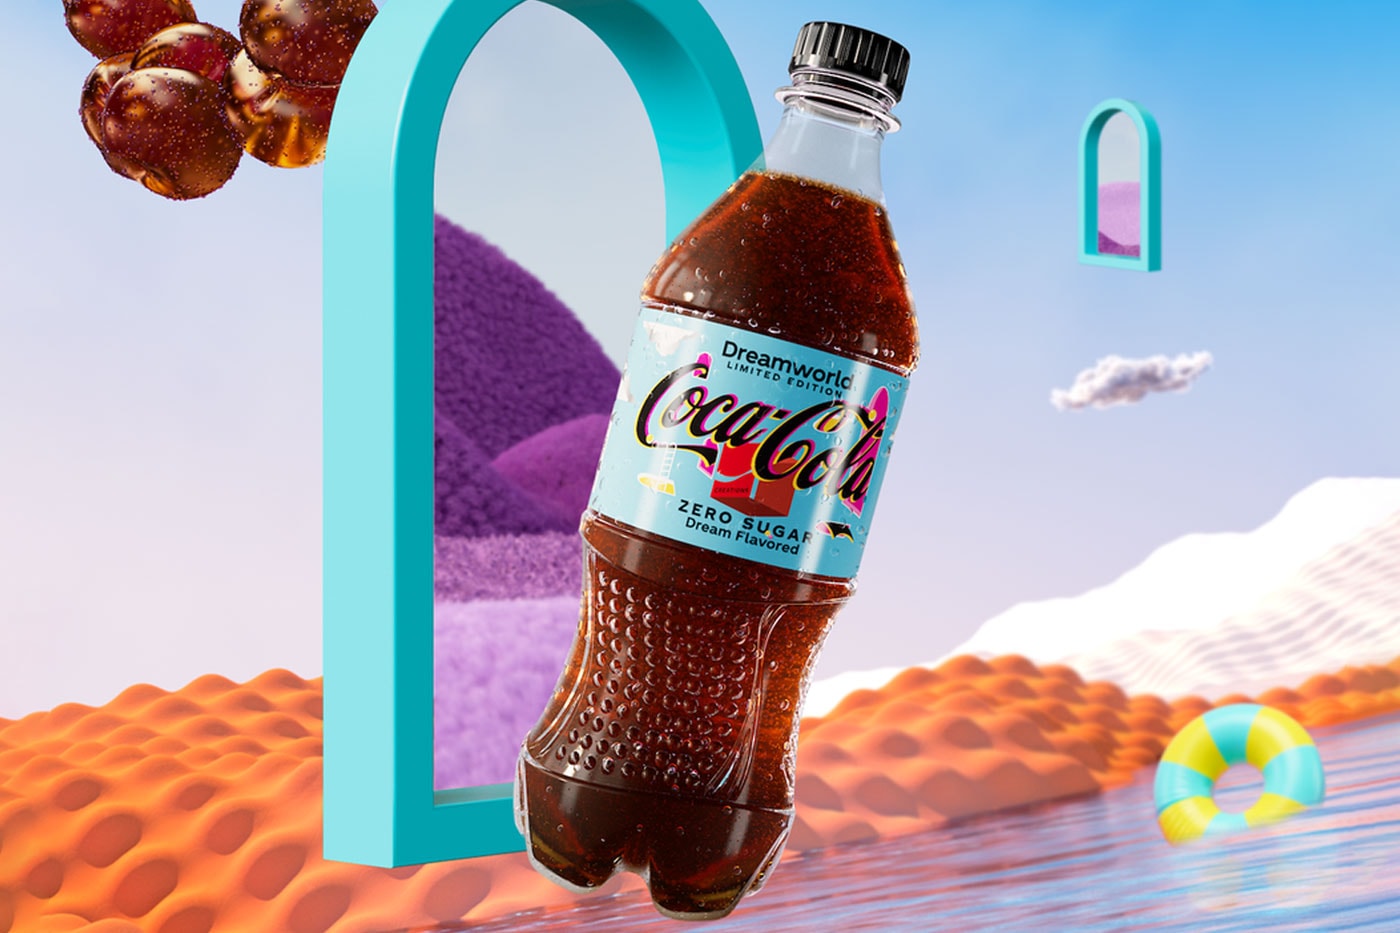 Coca Cola creations dreamworld starlight august 15 ar experience tomorrowland info date price